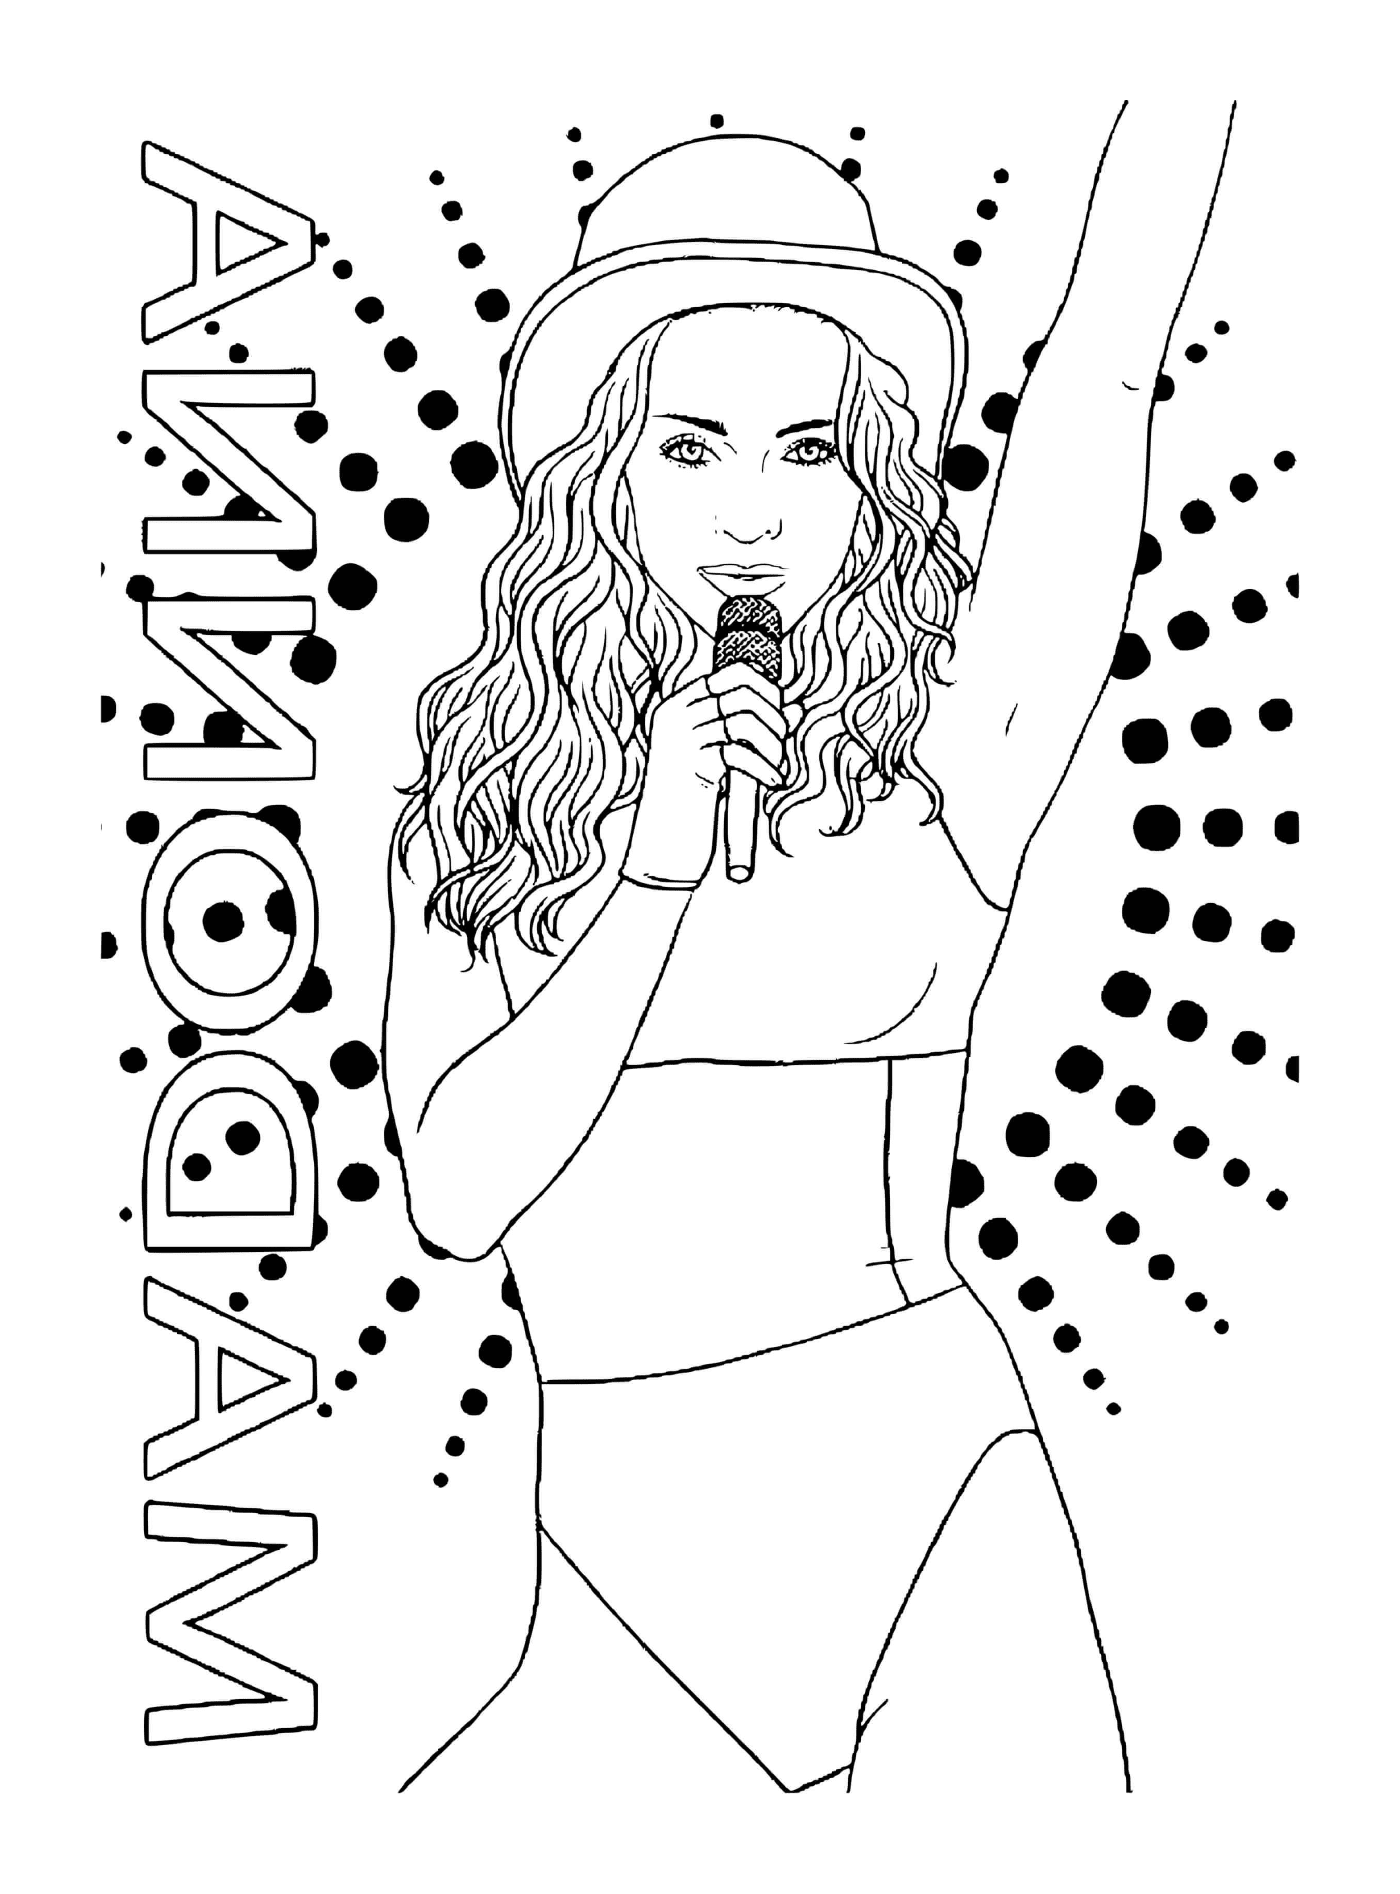  Мадонна, известная певица 